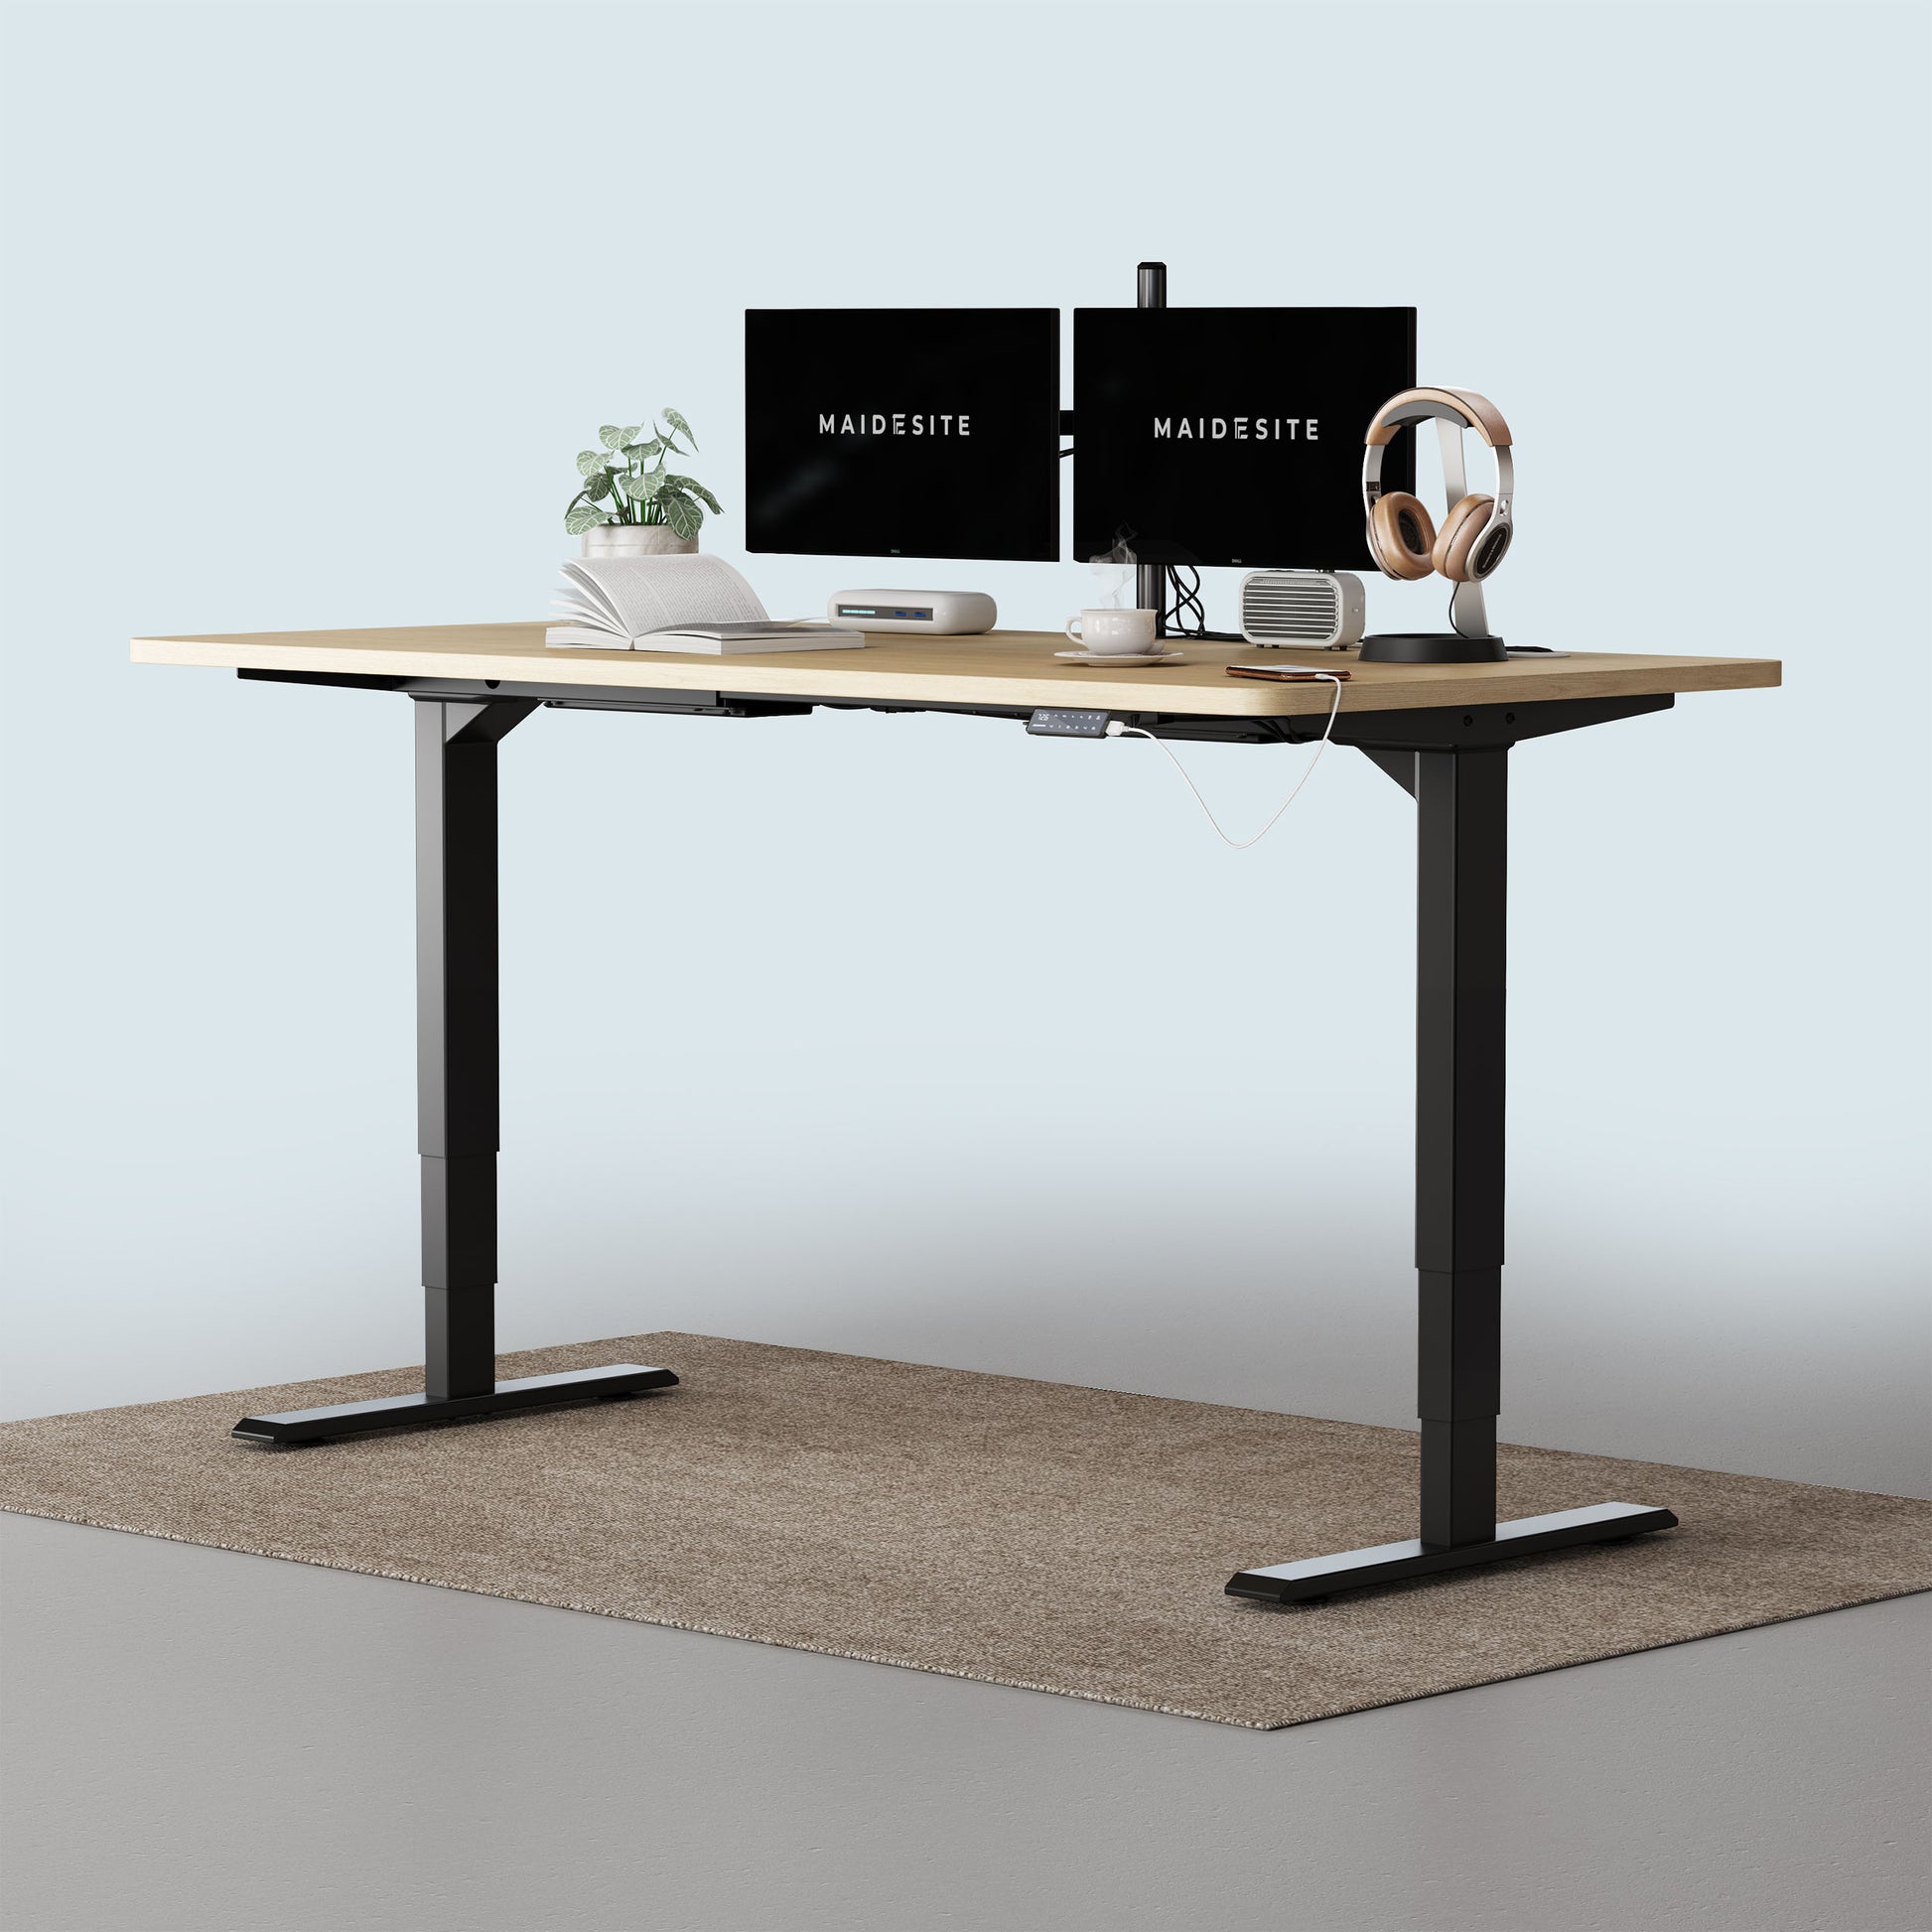 T2 Pro Plus standing desk black frame and 160x80cm oak desktop